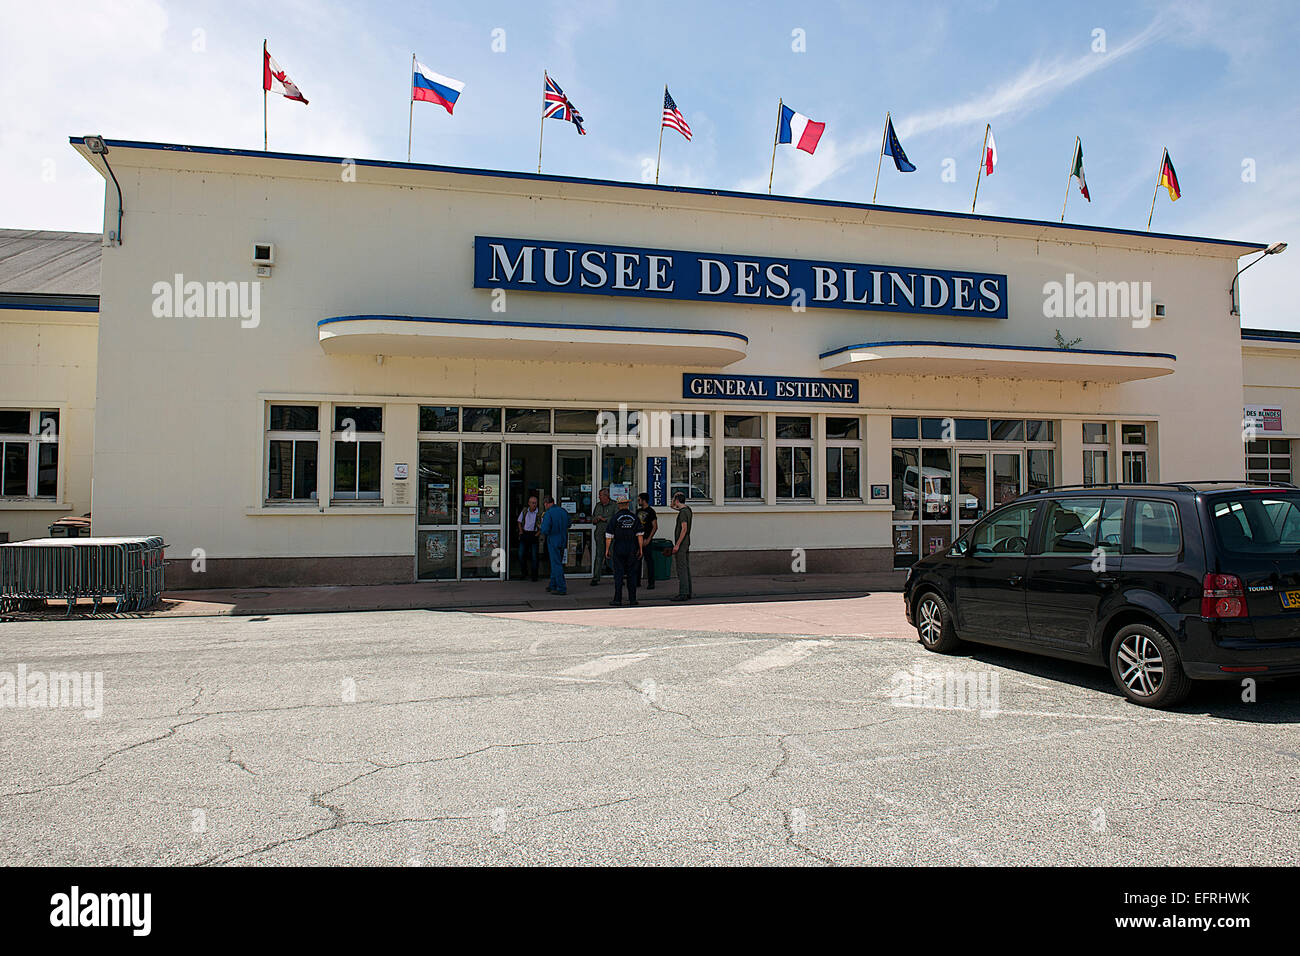 Musee des Blindes, Saumur, France Stock Photo